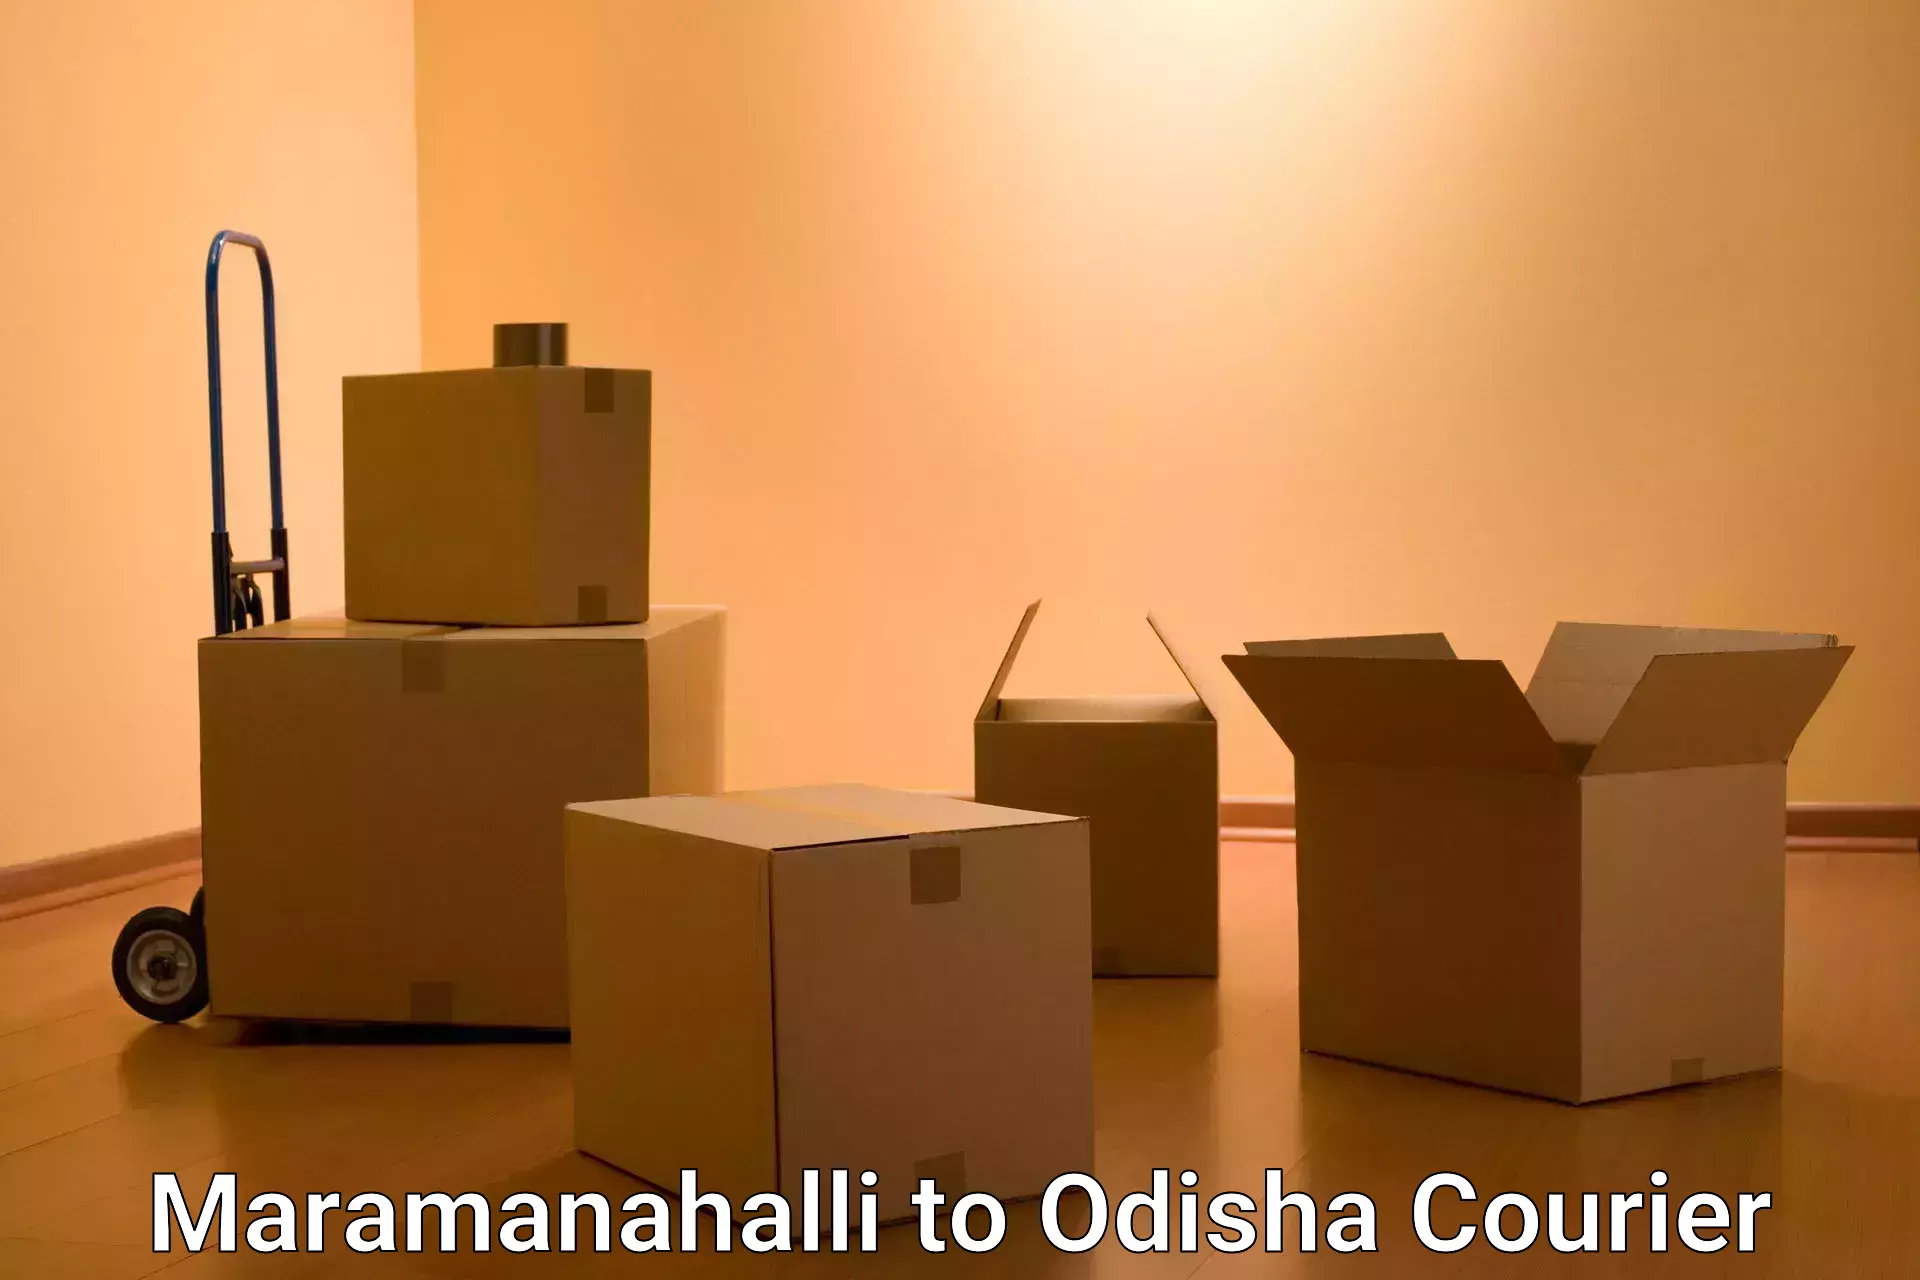 Cash on delivery service Maramanahalli to Odisha